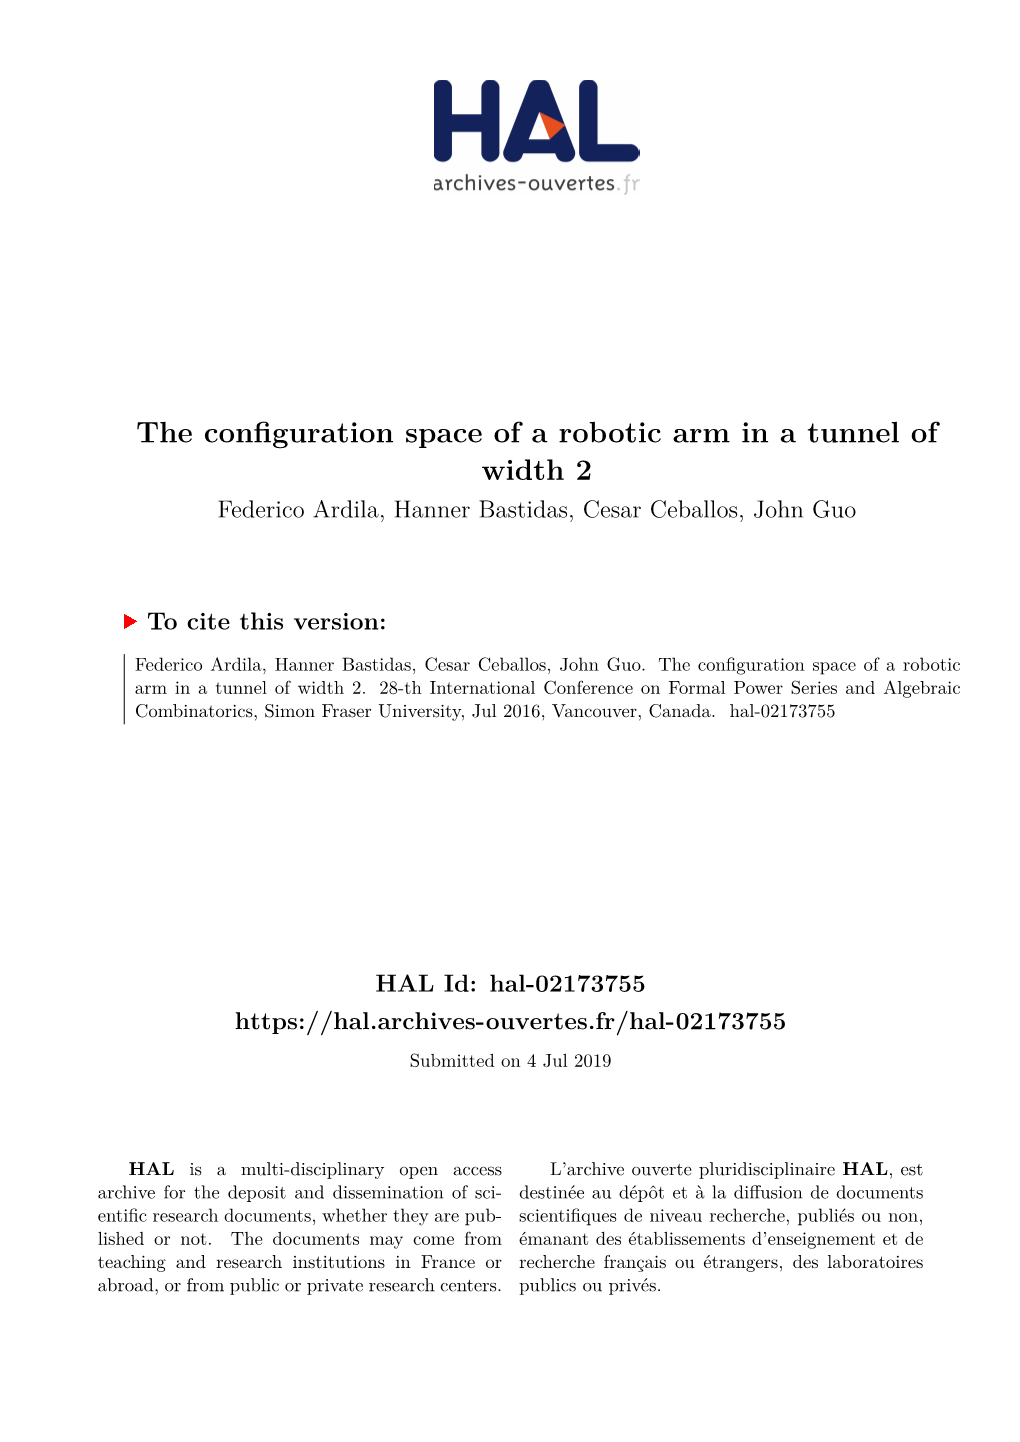 The Configuration Space of a Robotic Arm in a Tunnel of Width 2 Federico Ardila, Hanner Bastidas, Cesar Ceballos, John Guo